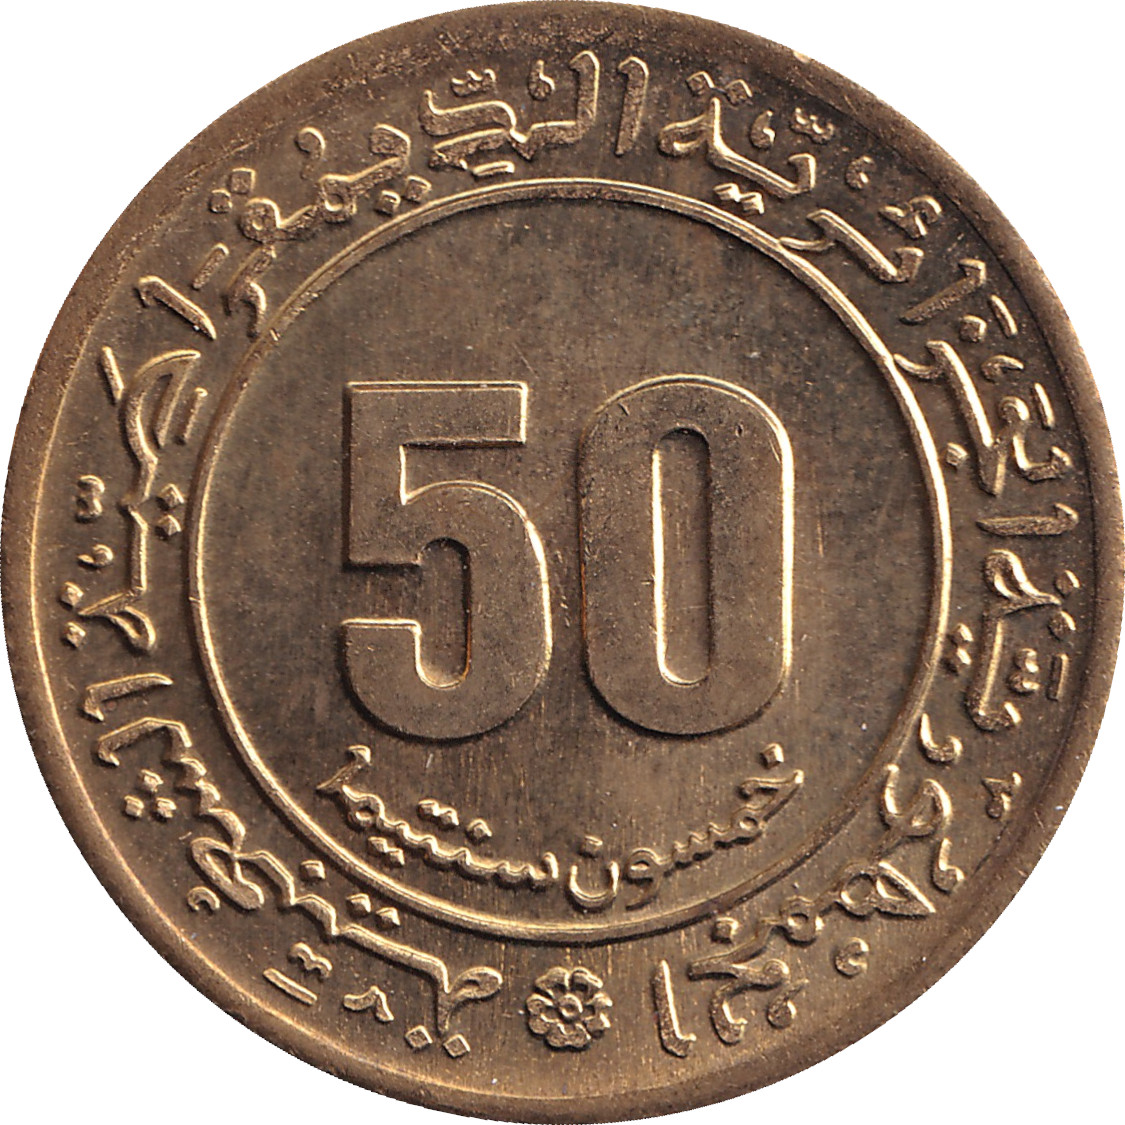 50 centimes - Massacre of Sétif - 30 years